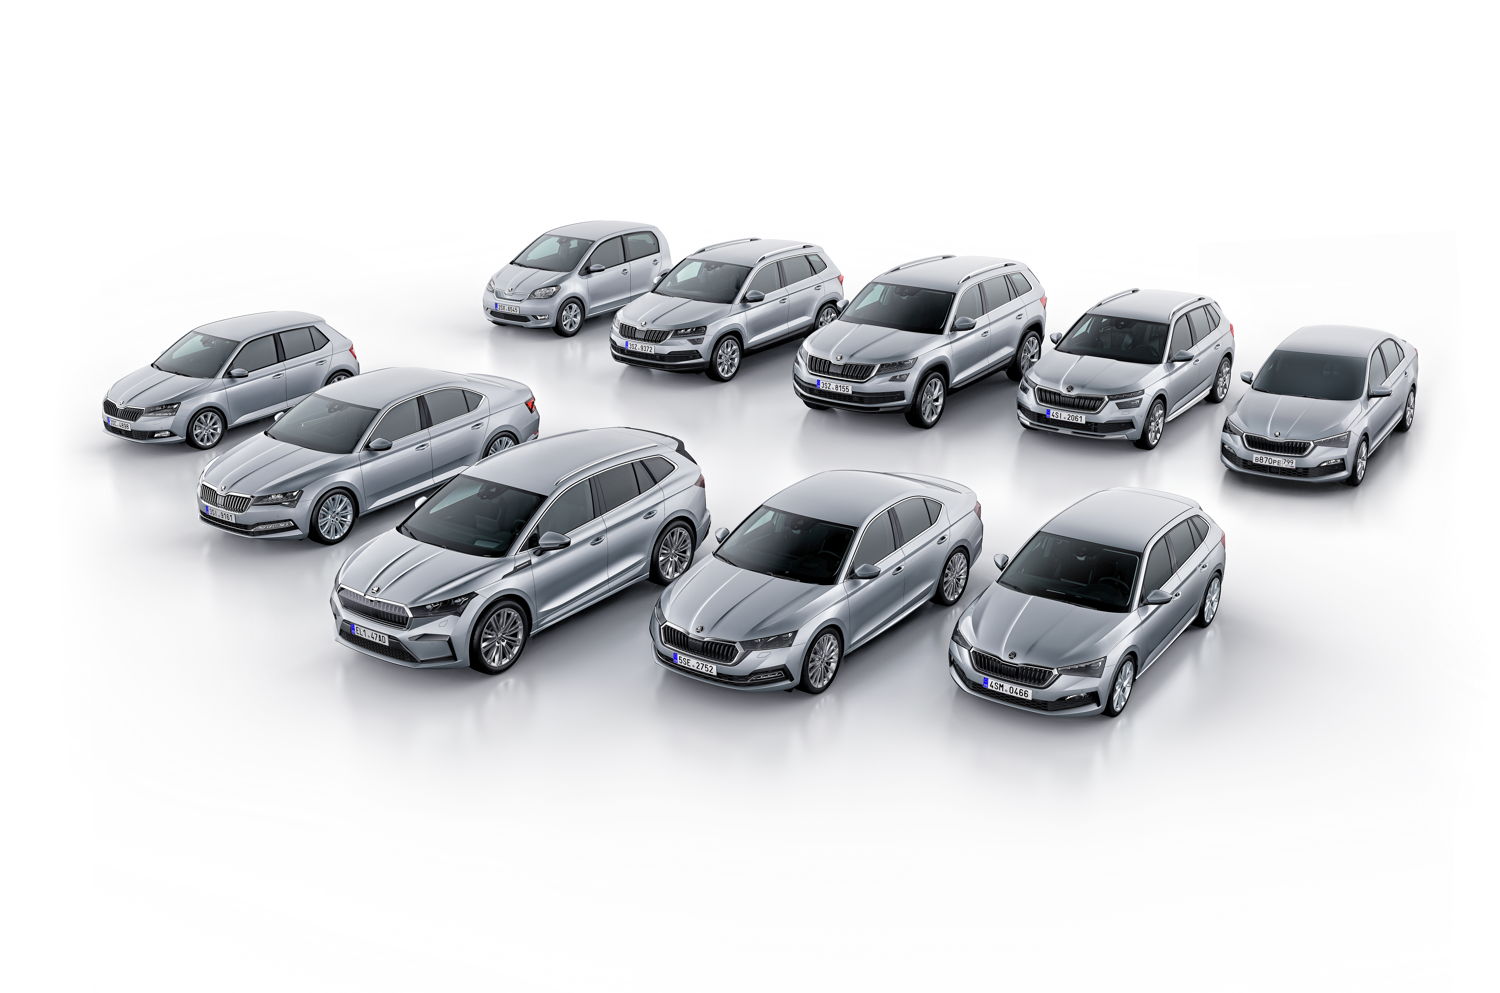 ŠKODA AUTO currently offers ten model series: The CITIGOe iV, FABIA, RAPID, SCALA, OCTAVIA, SUPERB, KAMIQ, KAROQ, KODIAQ and ENYAQ iV.